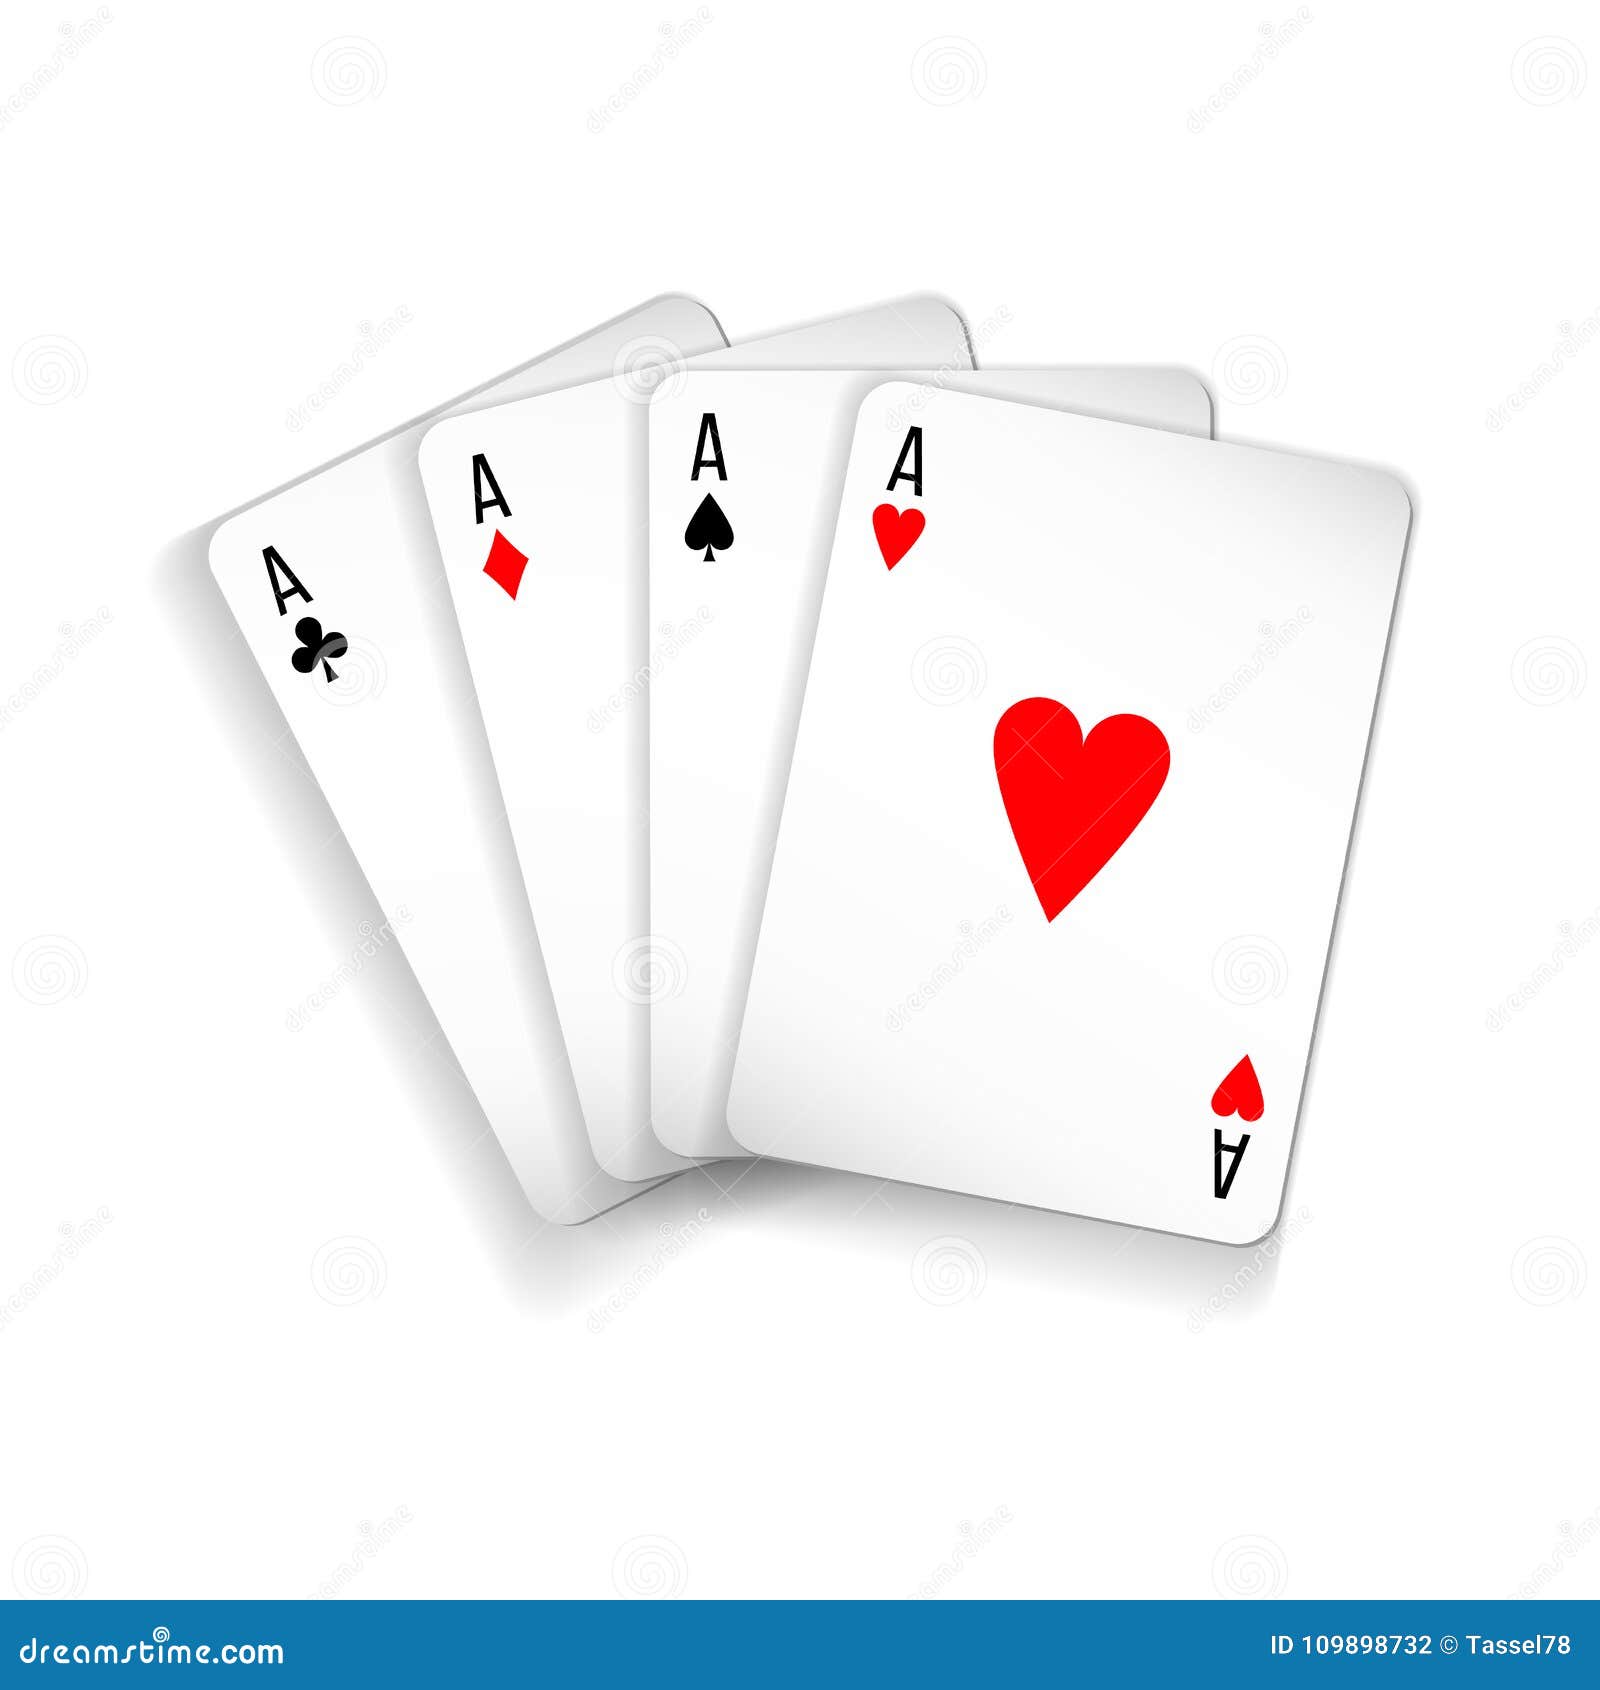 Hearts,diamonds,clubs,spades A pair of silver 4 aces cufflinks casino poker 